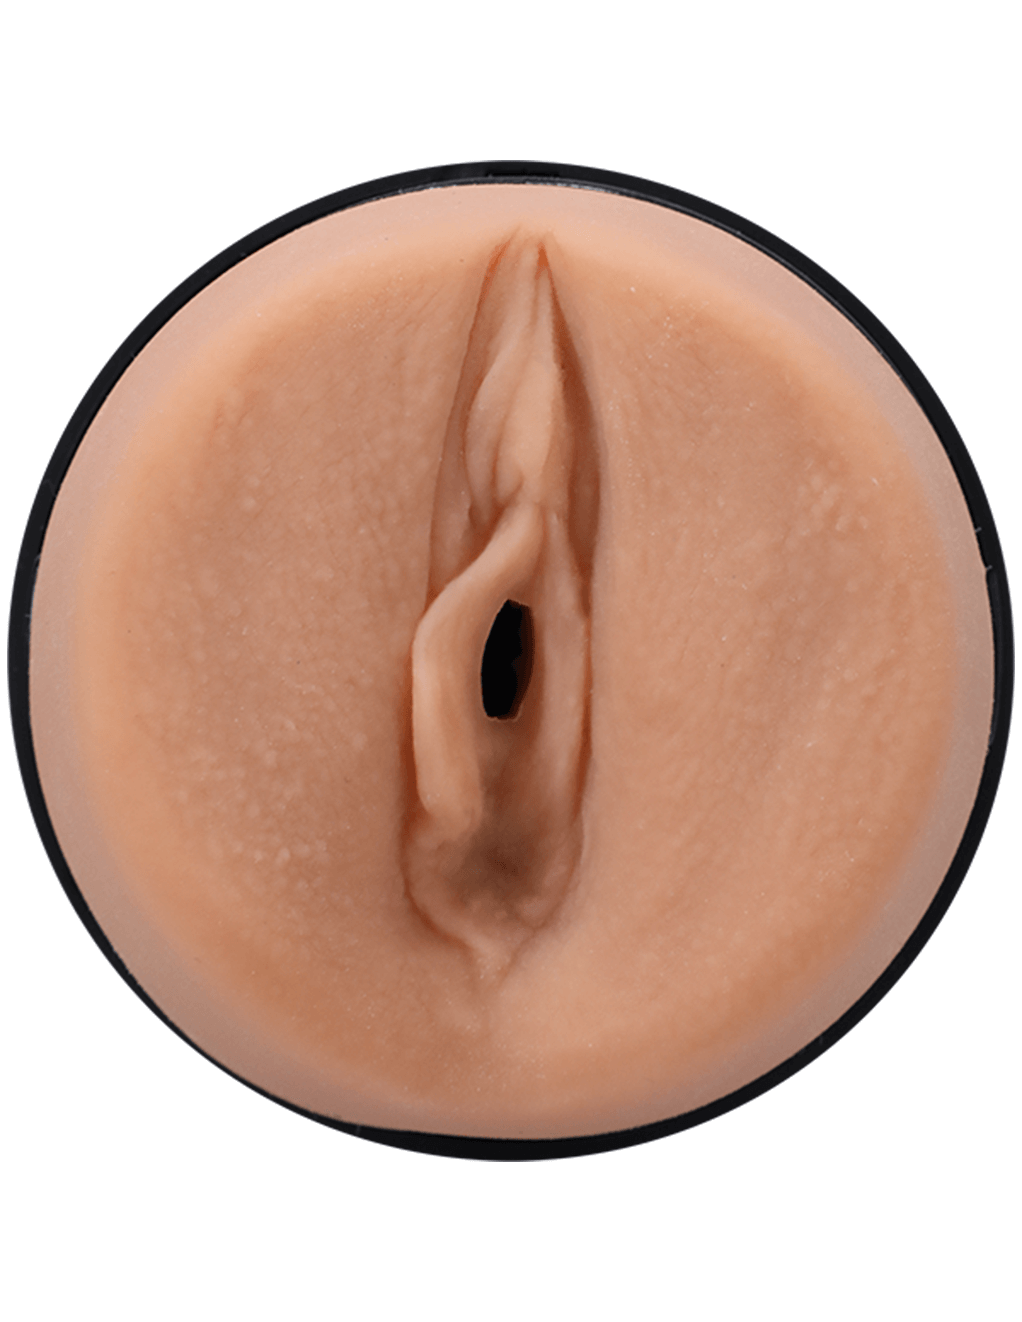 Main Squeeze Cindy Starfall Stroker - Detail